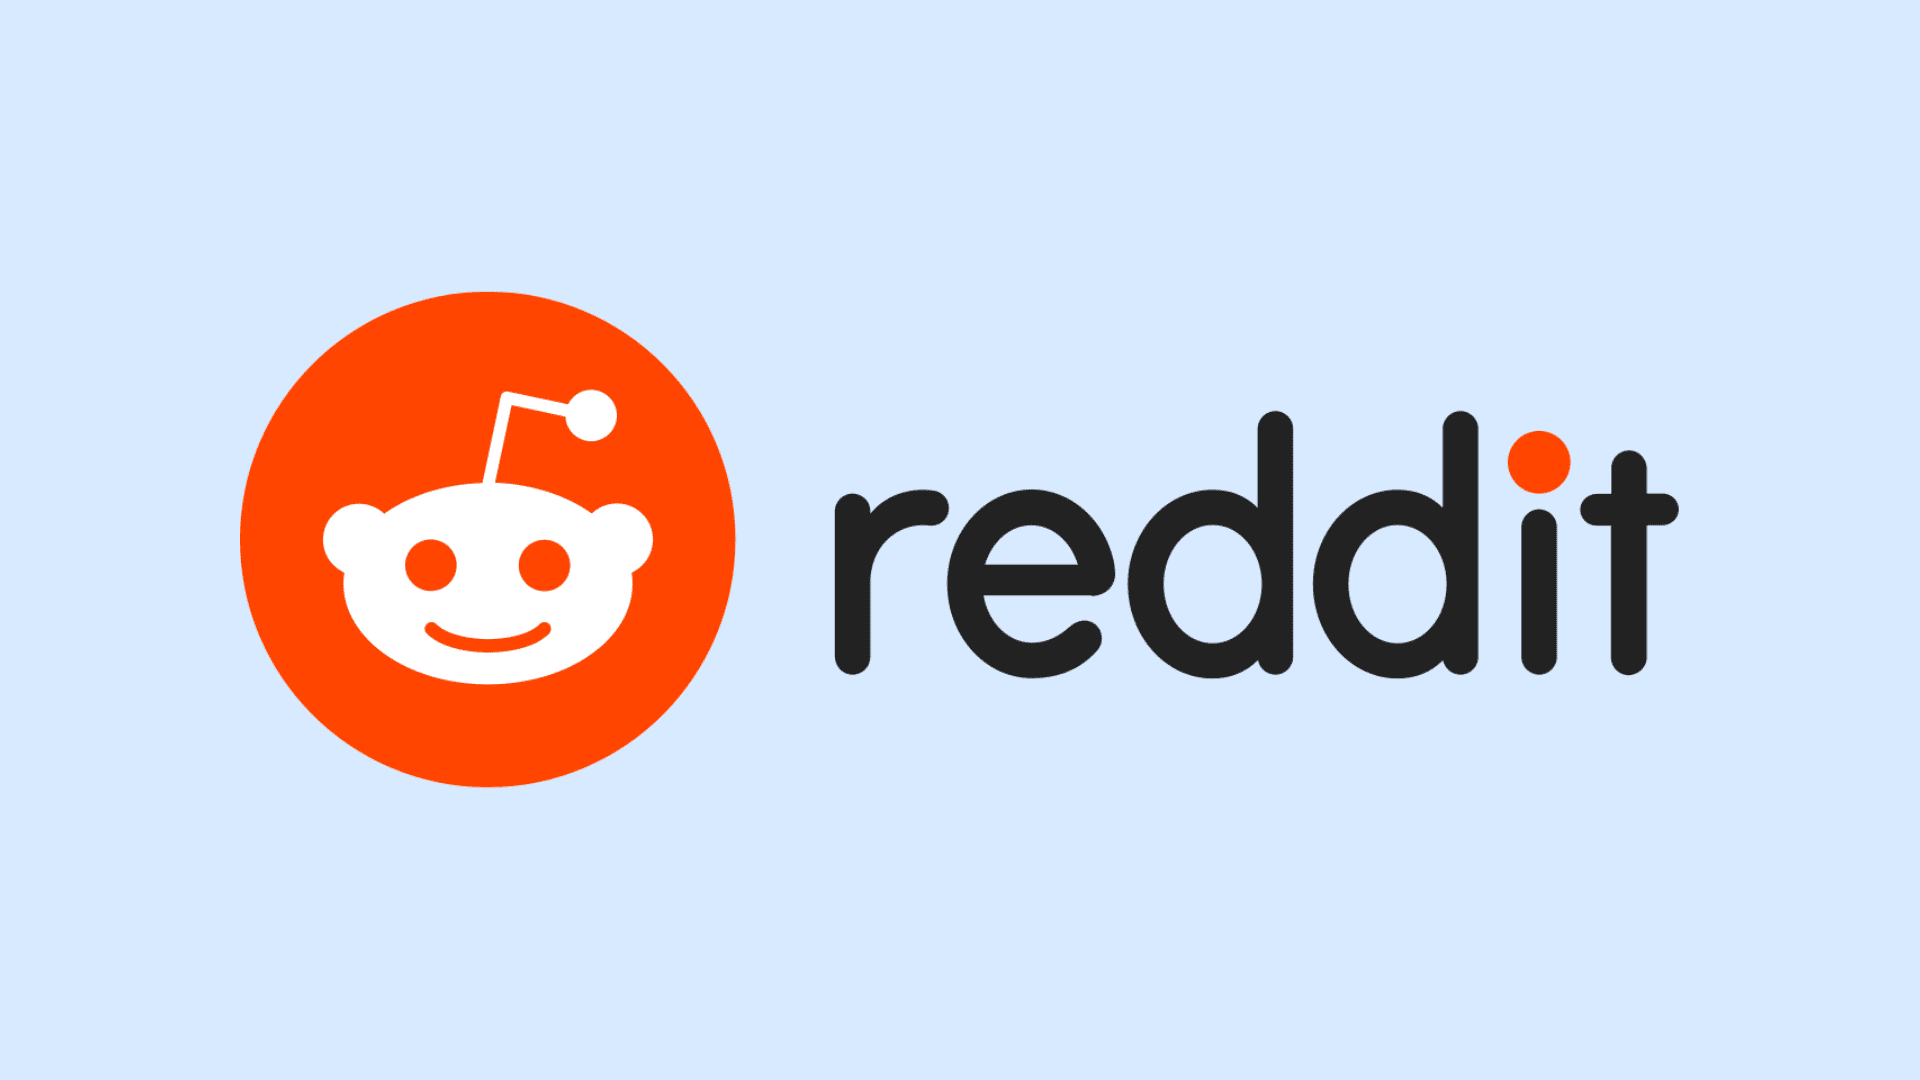 Full Reddit icon on a light blue background